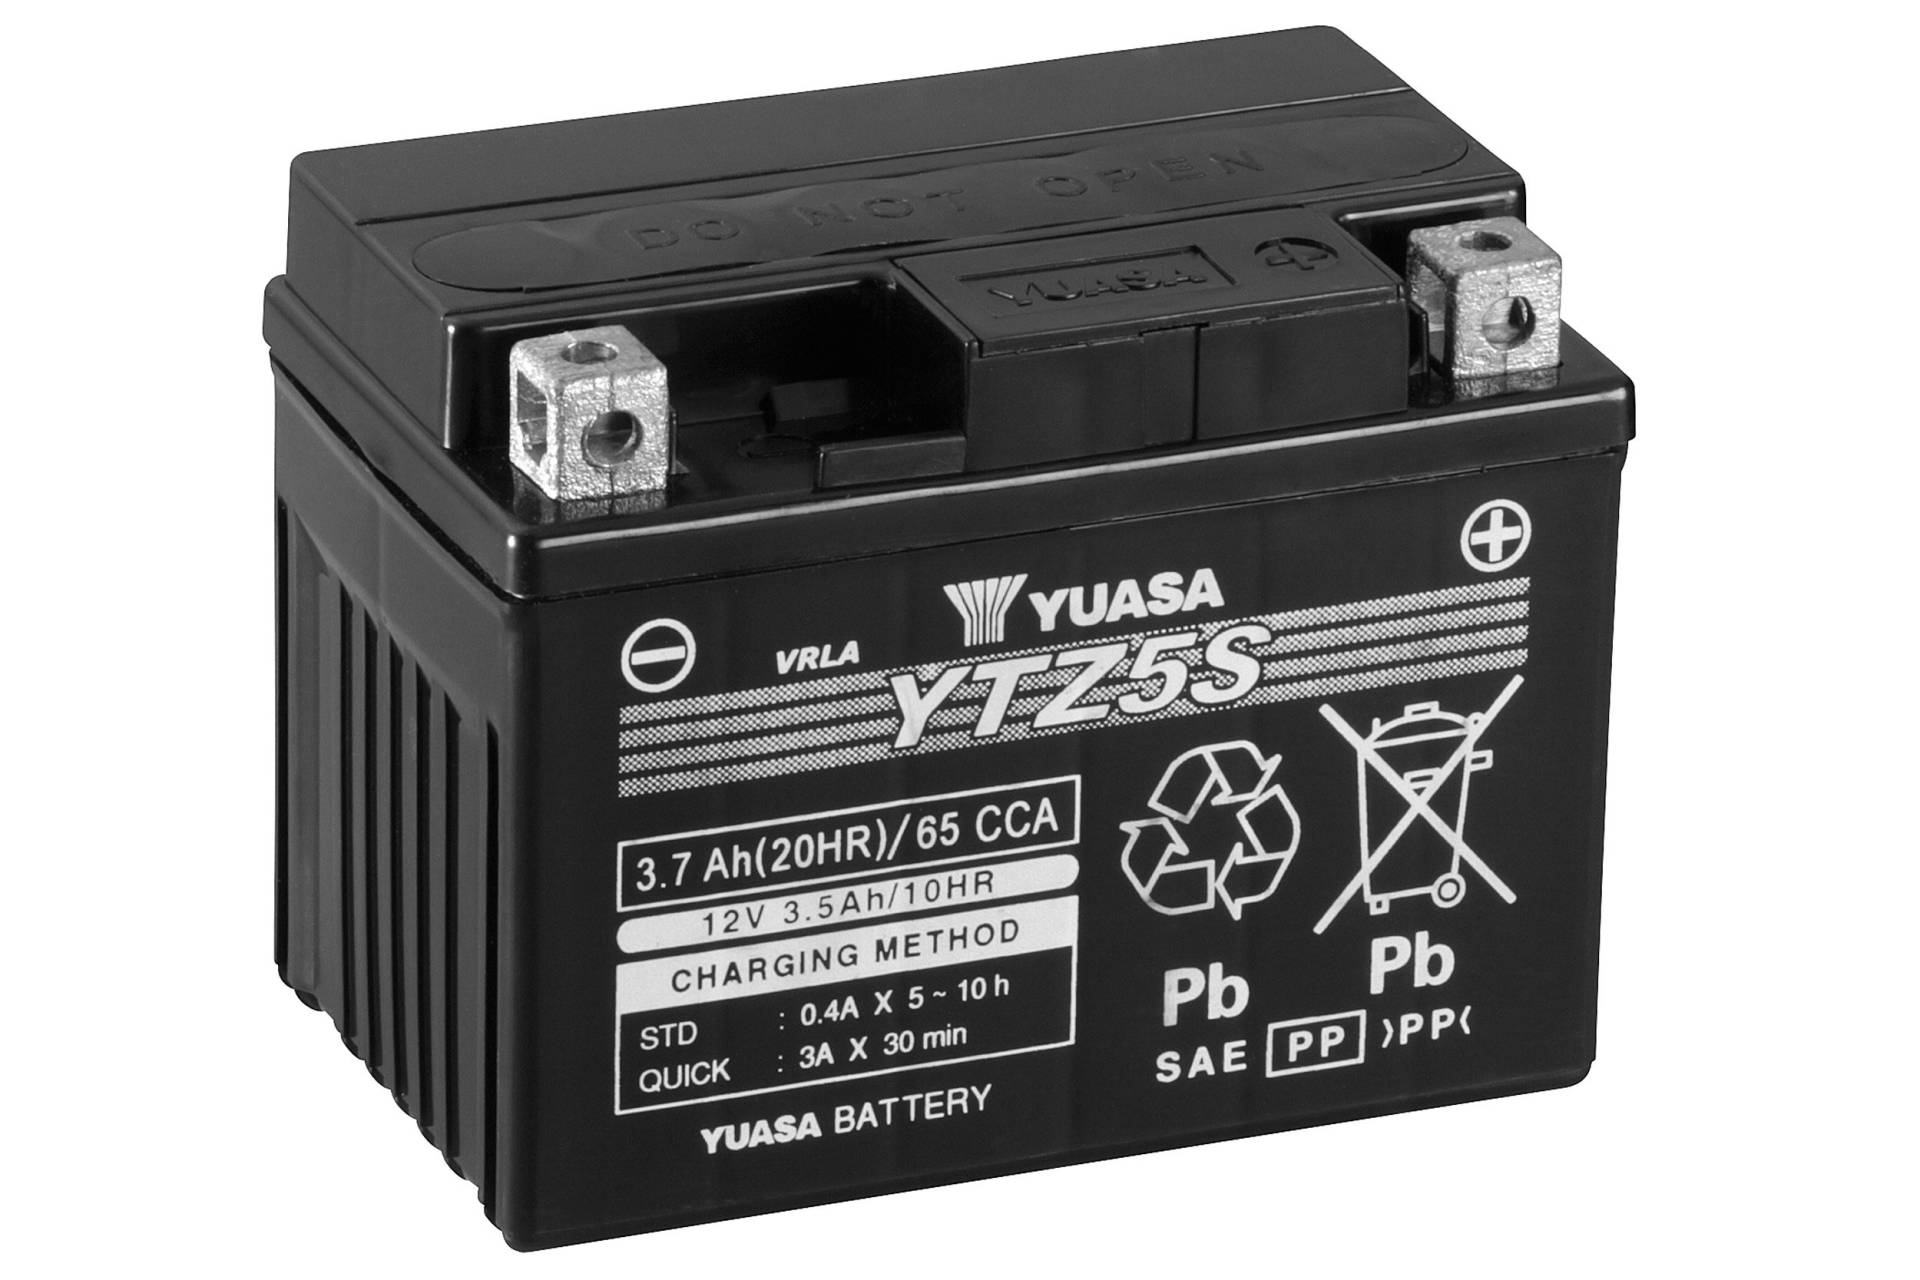 YUASA YTZ5S (CP) Hohe Leistung wartungsfrei Akku 11.5 x 7.2 x 8.6 cm von Yuasa